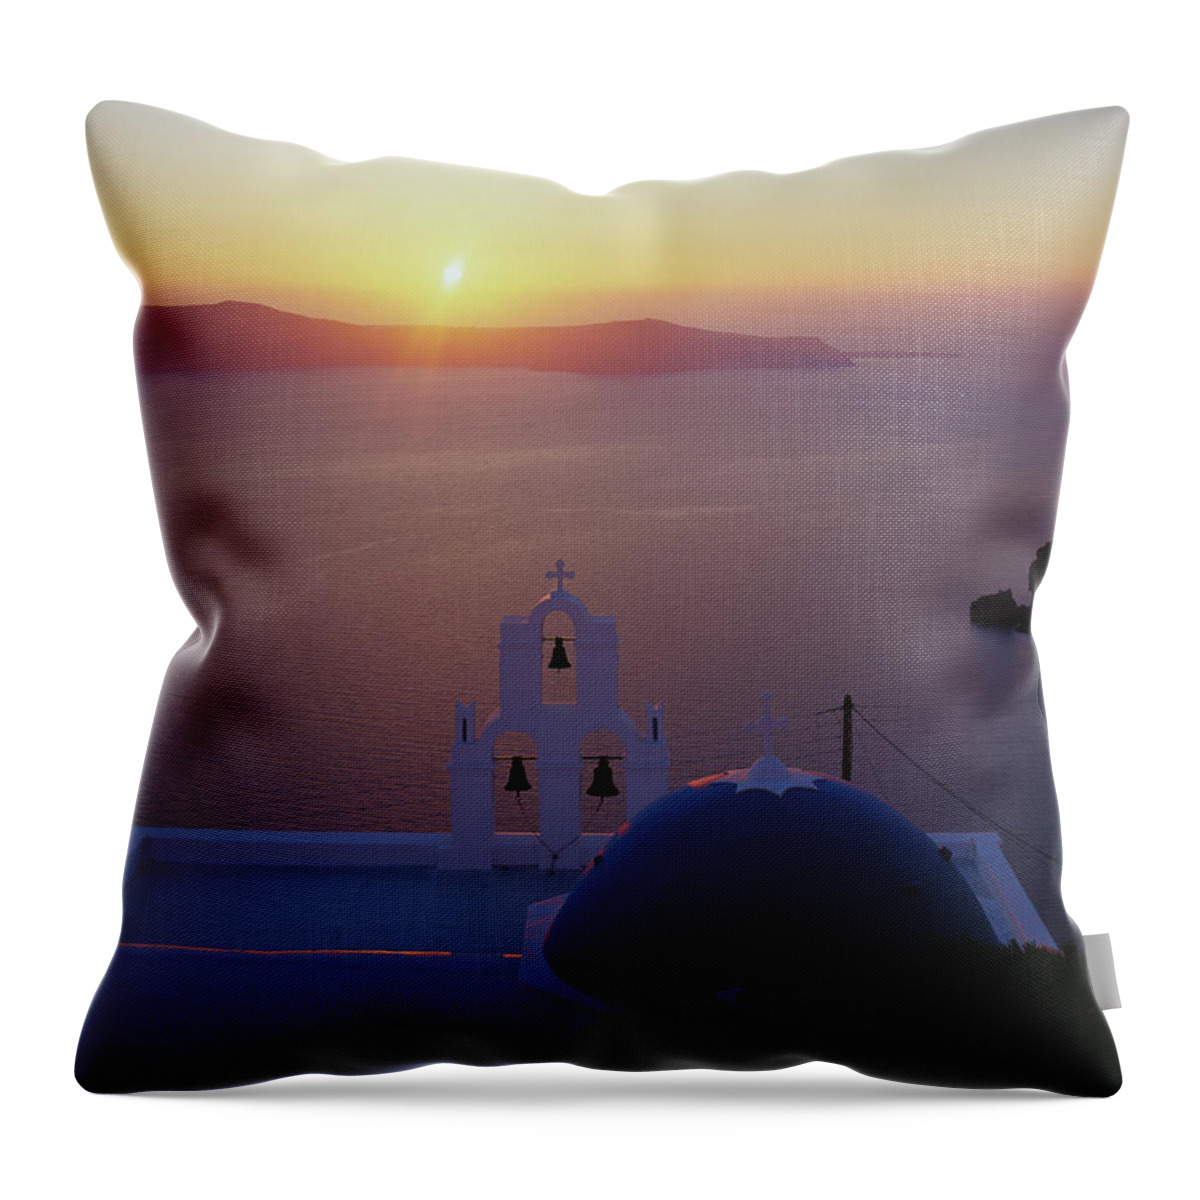 Estock Throw Pillow featuring the digital art Santorini In Greece by Gunter Grafenhain